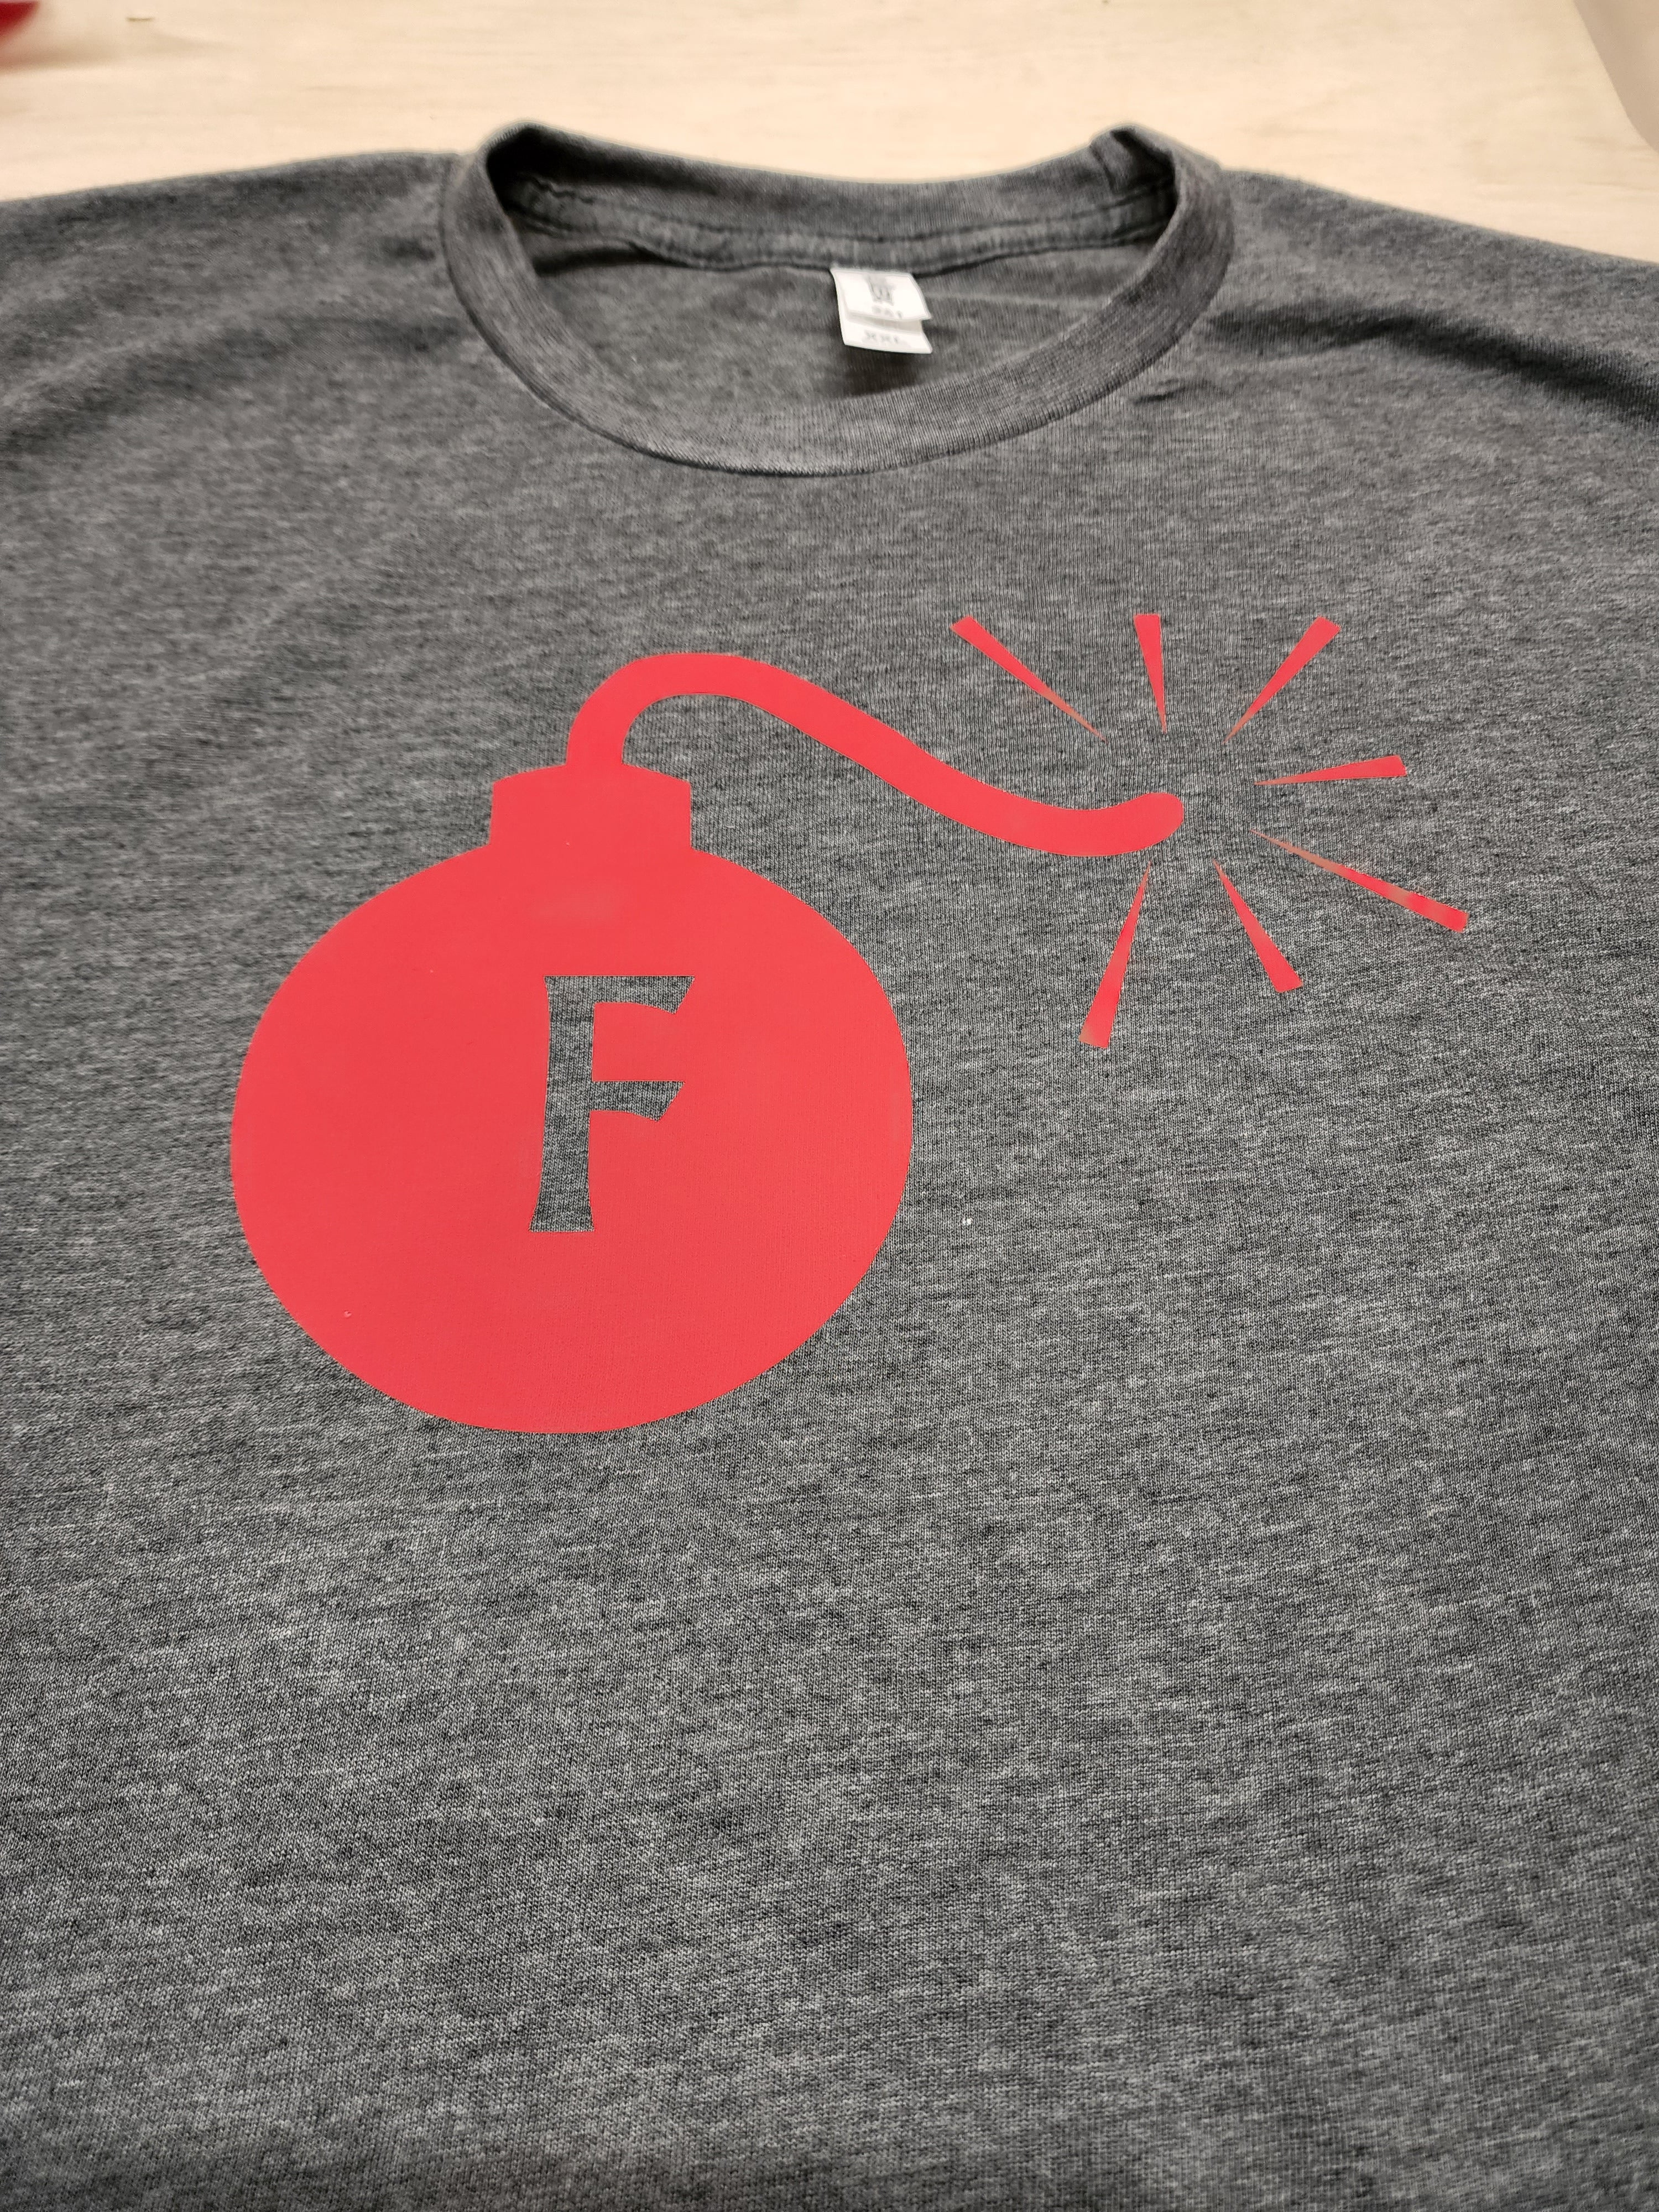 F Bomb Unisex T-Shirt by Lem